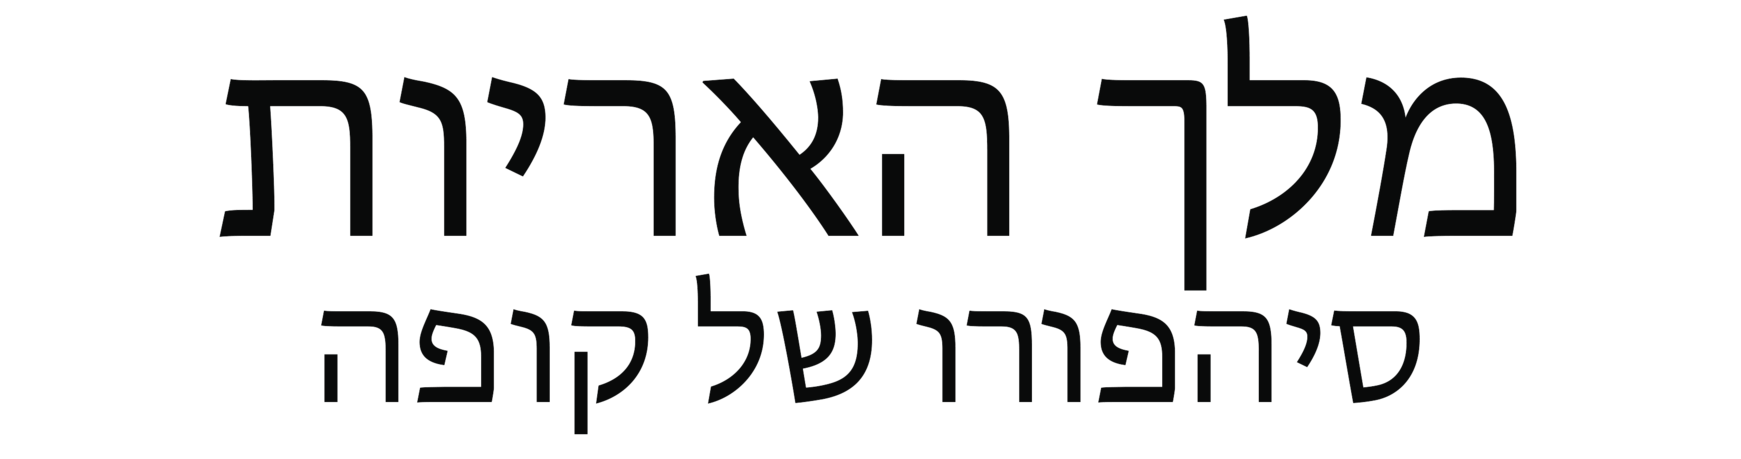 Hebrew Logo - Kopa's Story Logo (Hebrew)